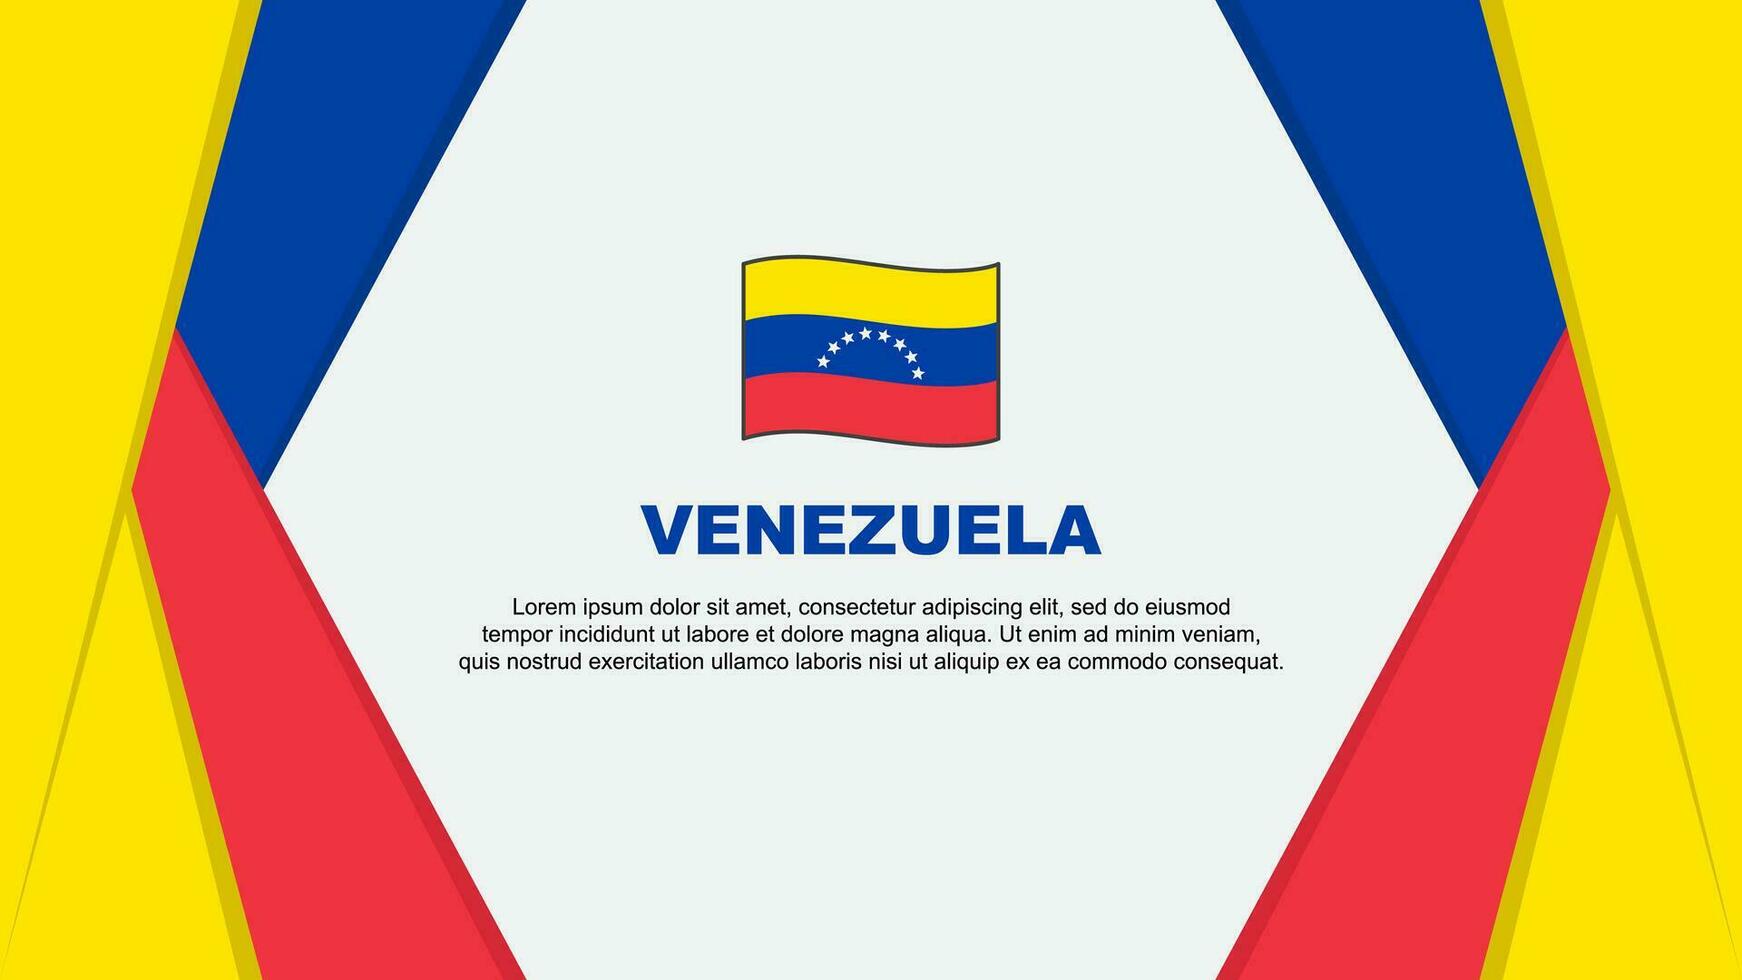 Venezuela Flag Abstract Background Design Template. Venezuela Independence Day Banner Cartoon Vector Illustration. Venezuela Background